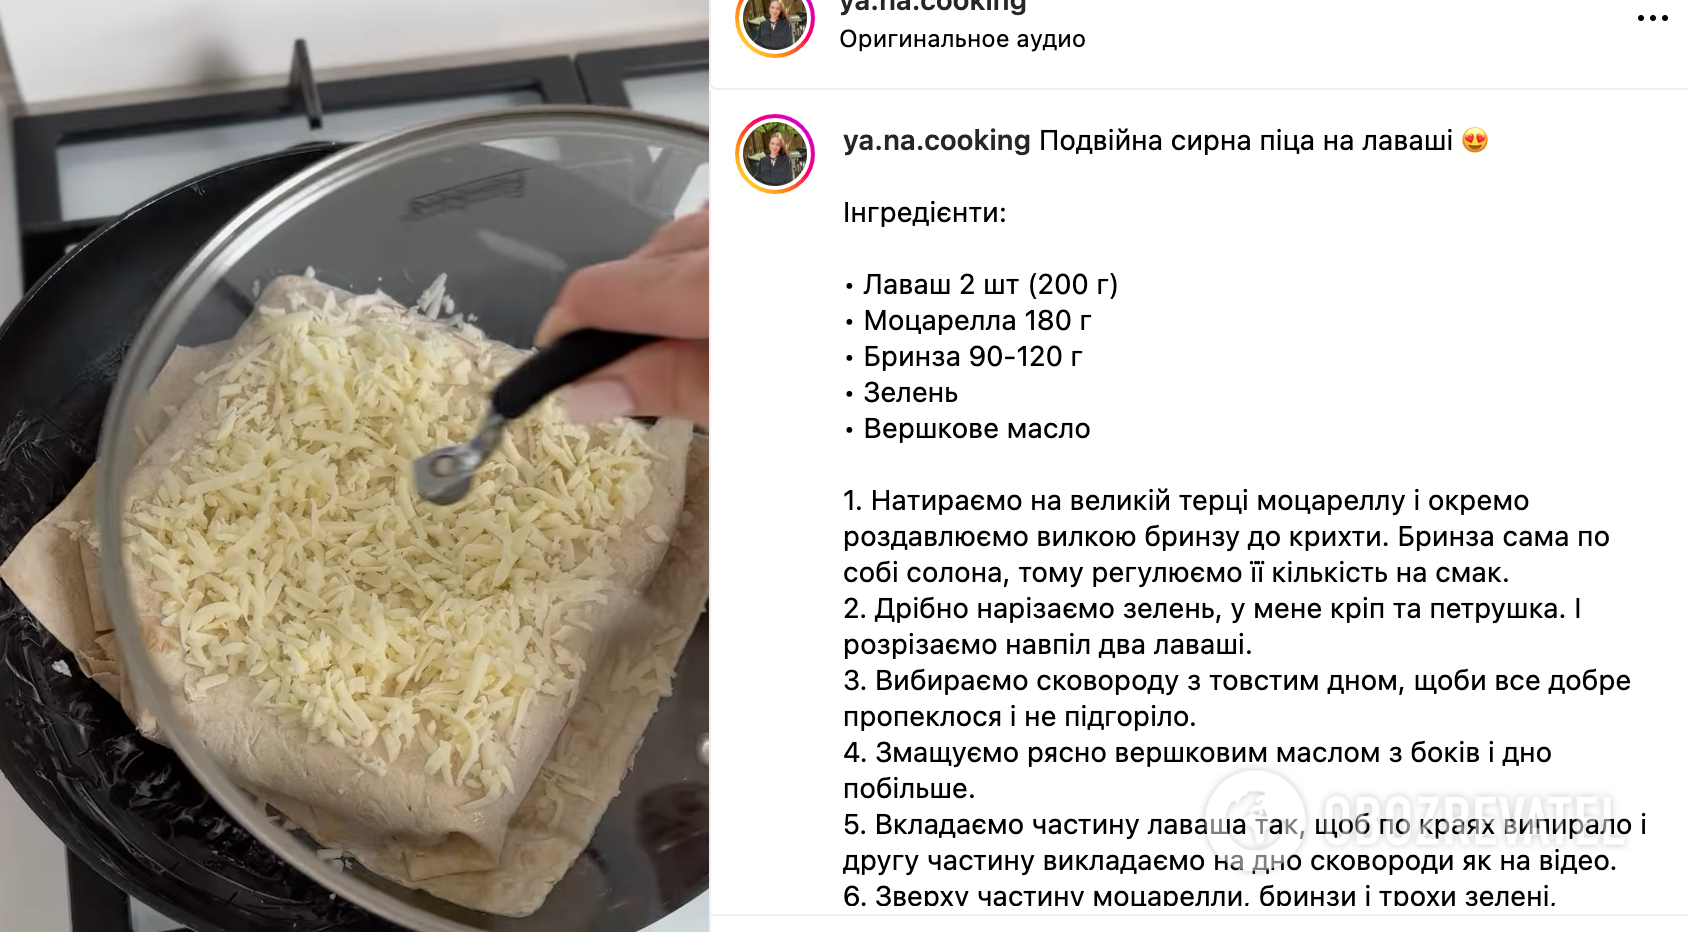 Recipe of the dish